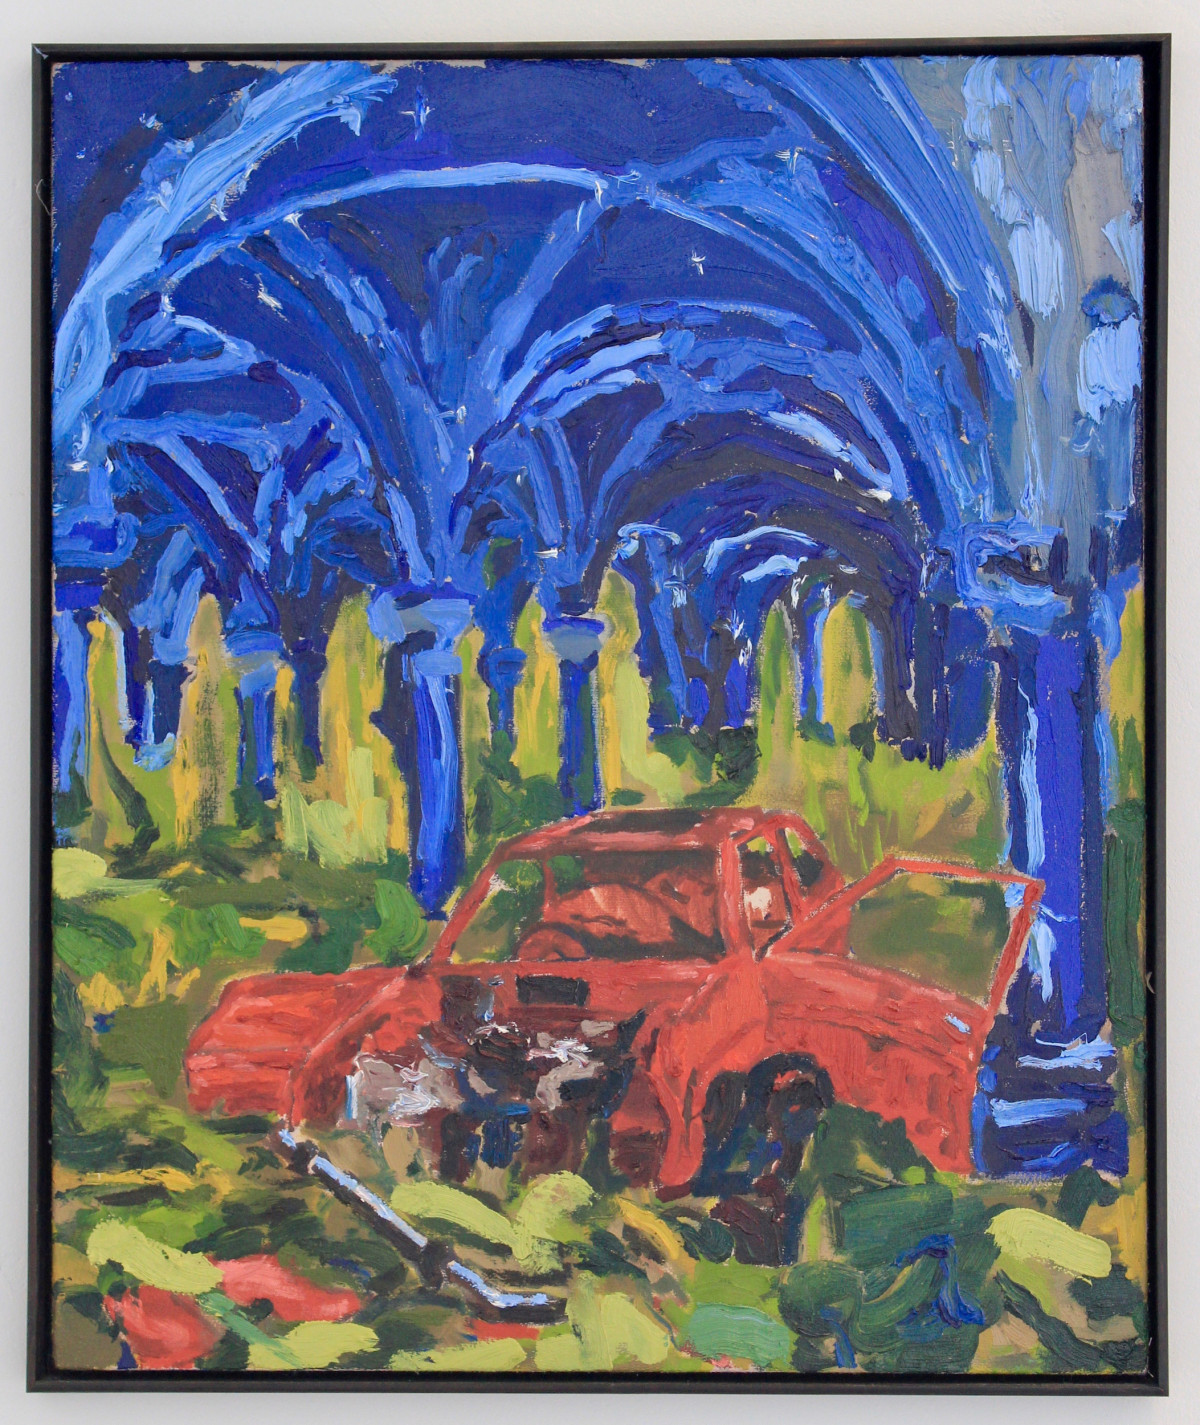 'Pilgrims Way'; Oil on canvas, 55 x 70cm